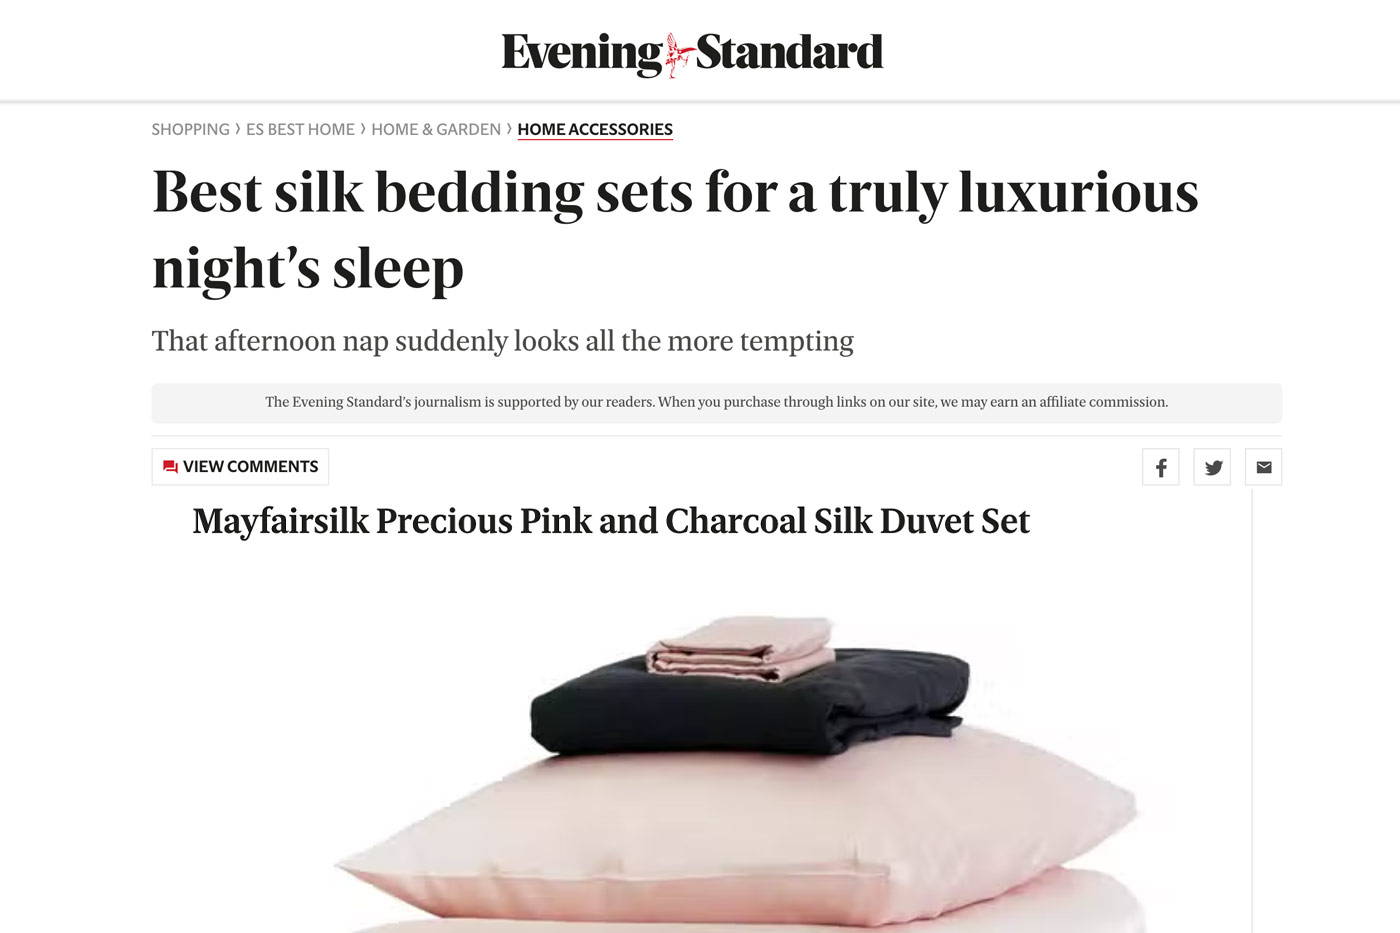 Evening Standard 将 Mayfairsilk 评为市场上最好的丝绸床上用品品牌之一